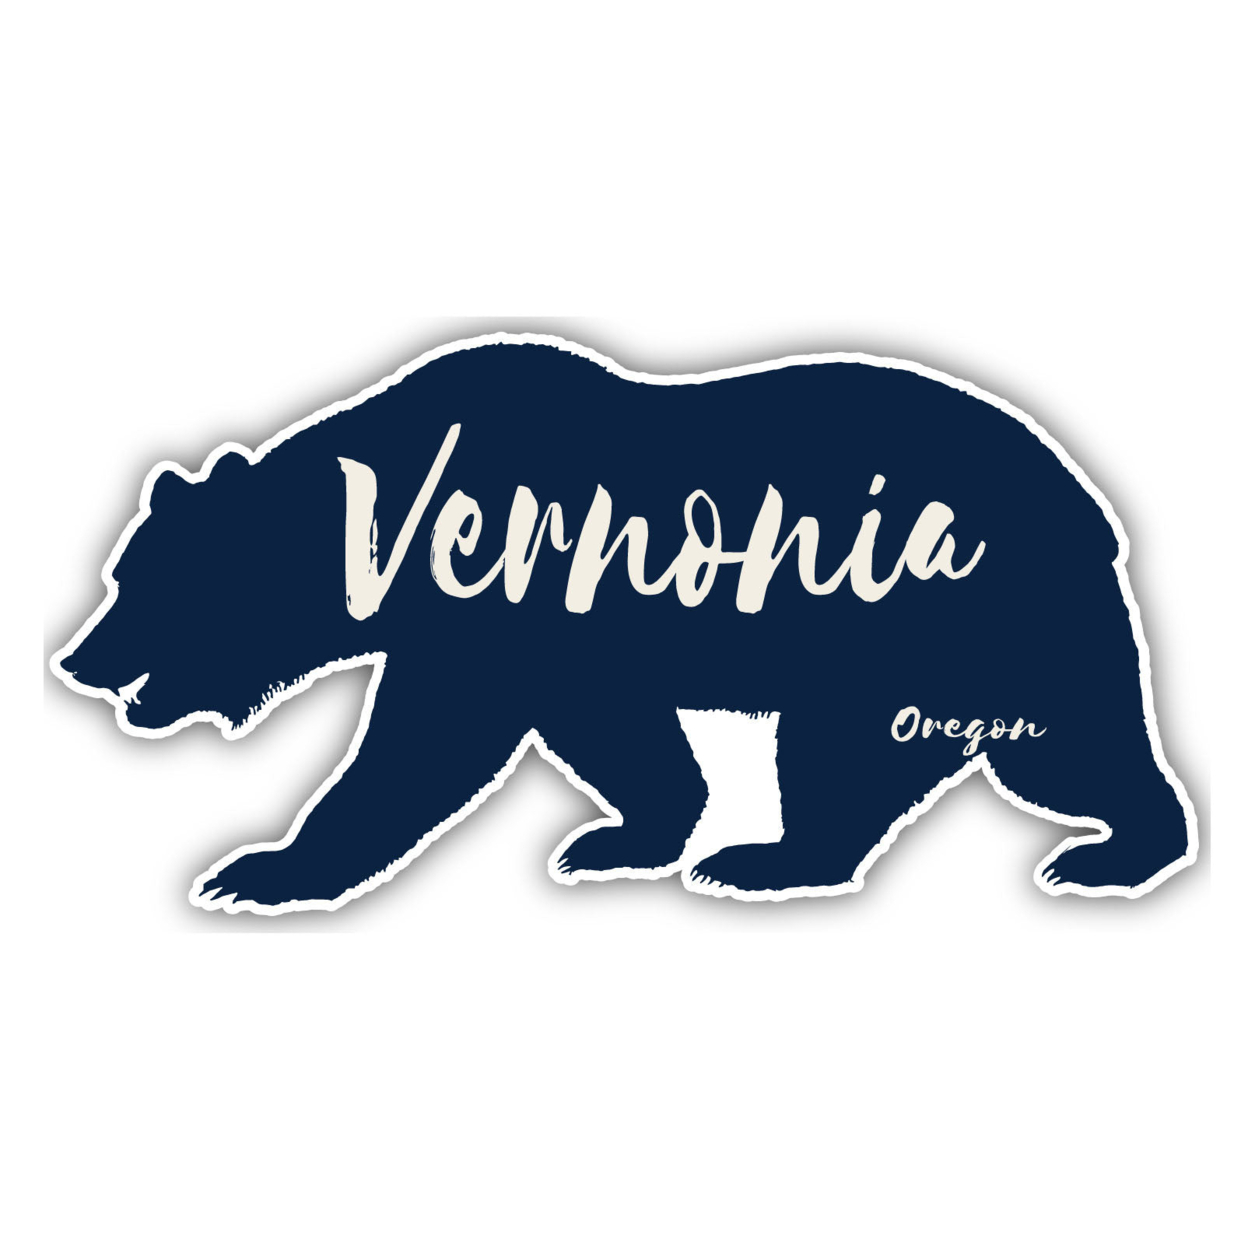 Vernonia Oregon Souvenir Decorative Stickers (Choose Theme And Size) - Single Unit, 4-Inch, Bear